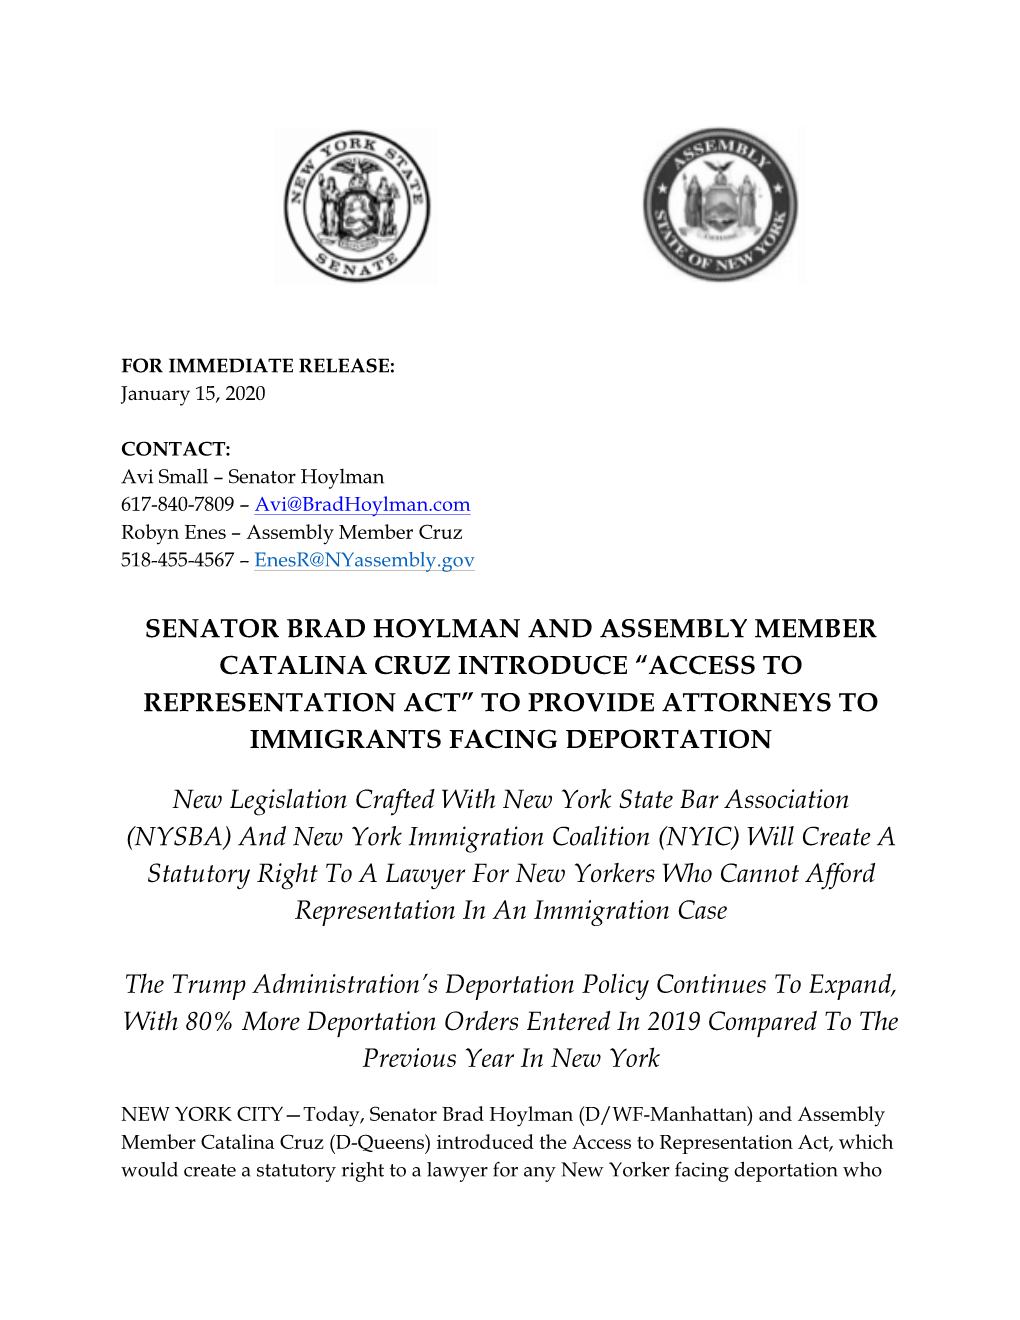 Senator Brad Hoylman and Assembly Member Catalina Cruz Introduce “Access to Representation Act” to Provide Attorneys to Immigrants Facing Deportation